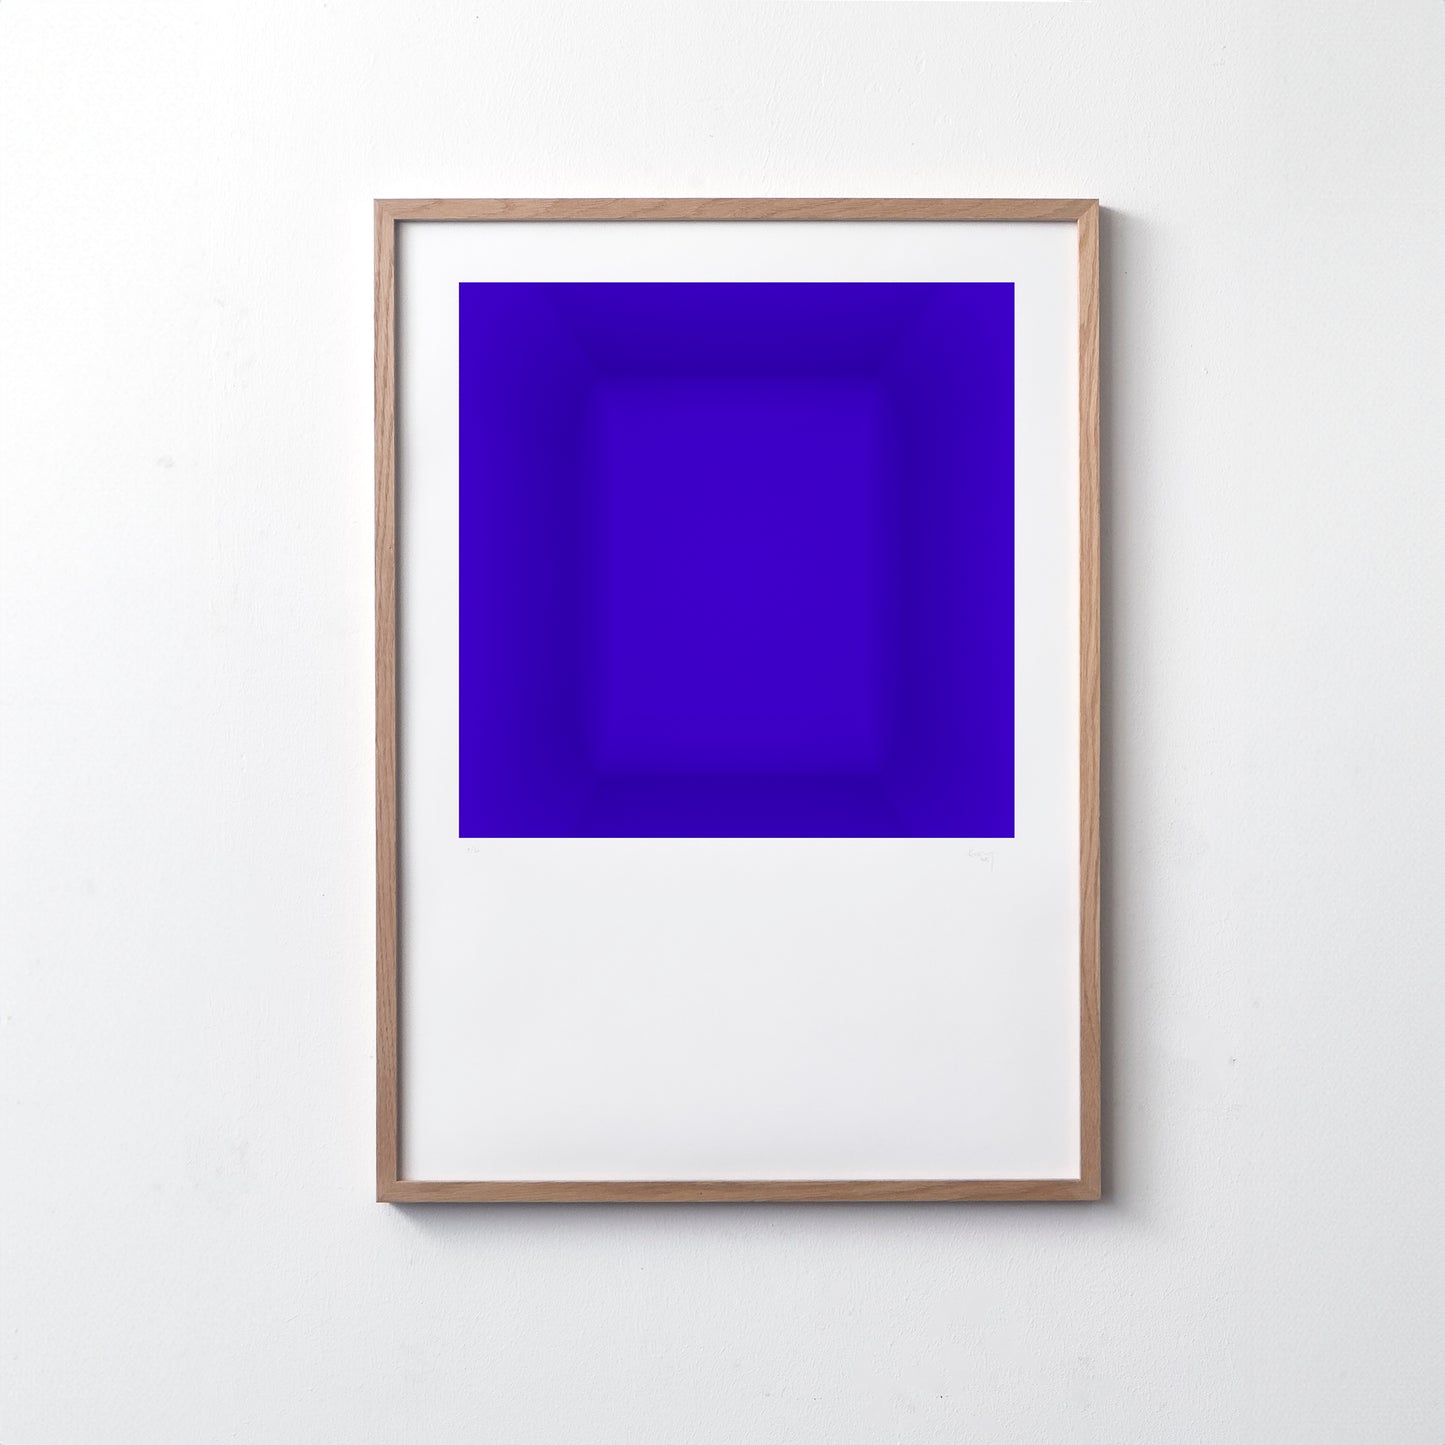 Kunstdruck im Bilderrahmen, Motiv blau monochromer Raum, Titel IKB III - Edition